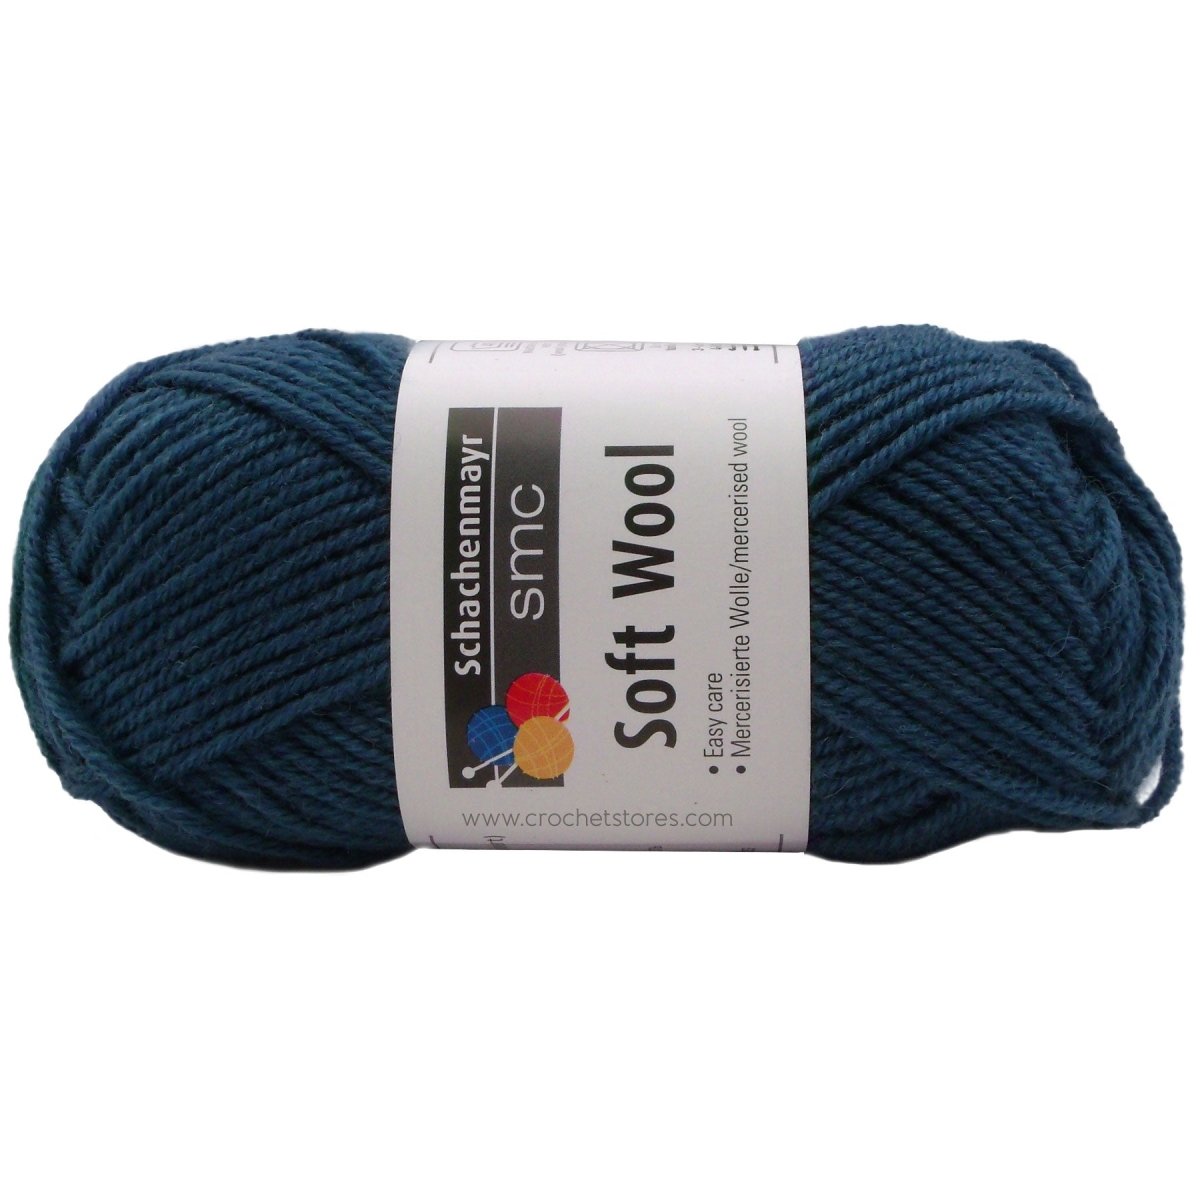 SOFT WOOL - Crochetstores9807536-694082700938391